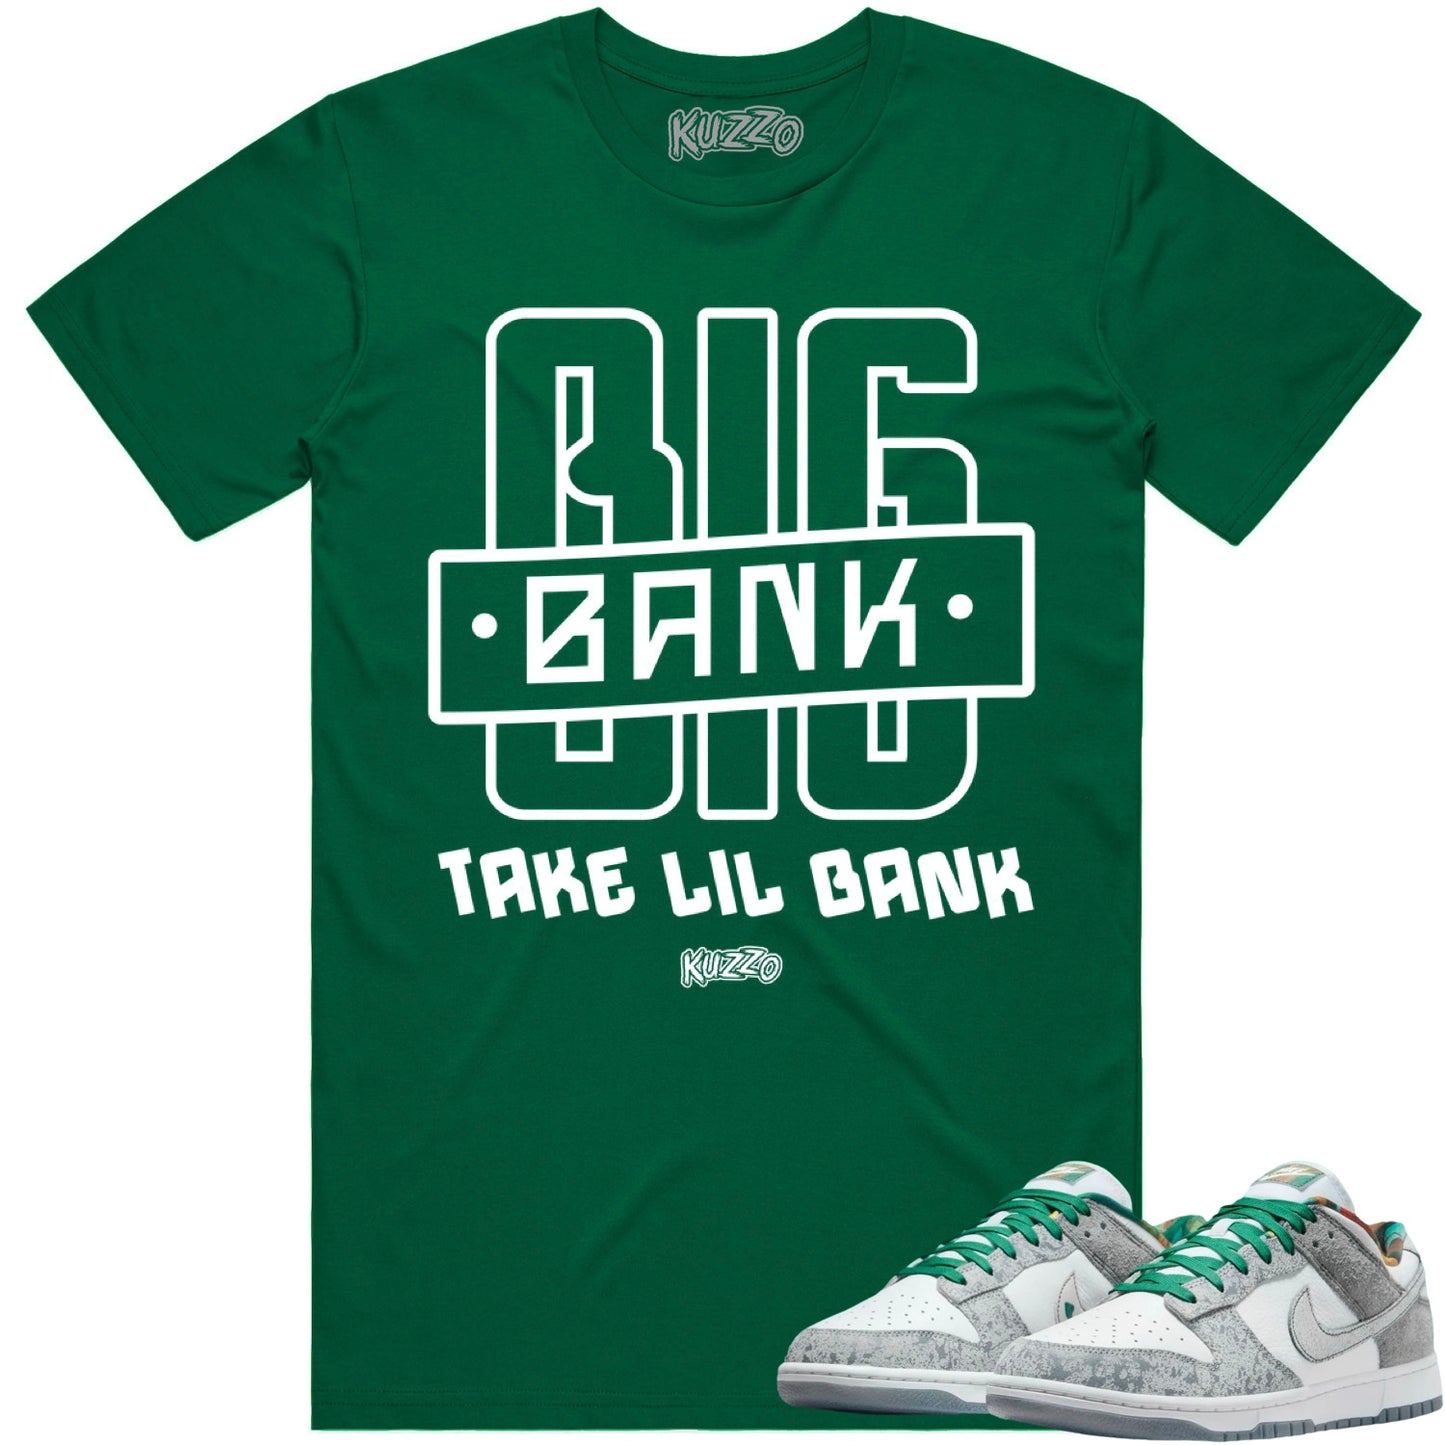 Philly Dunks Shirt to Match - BIG BANK